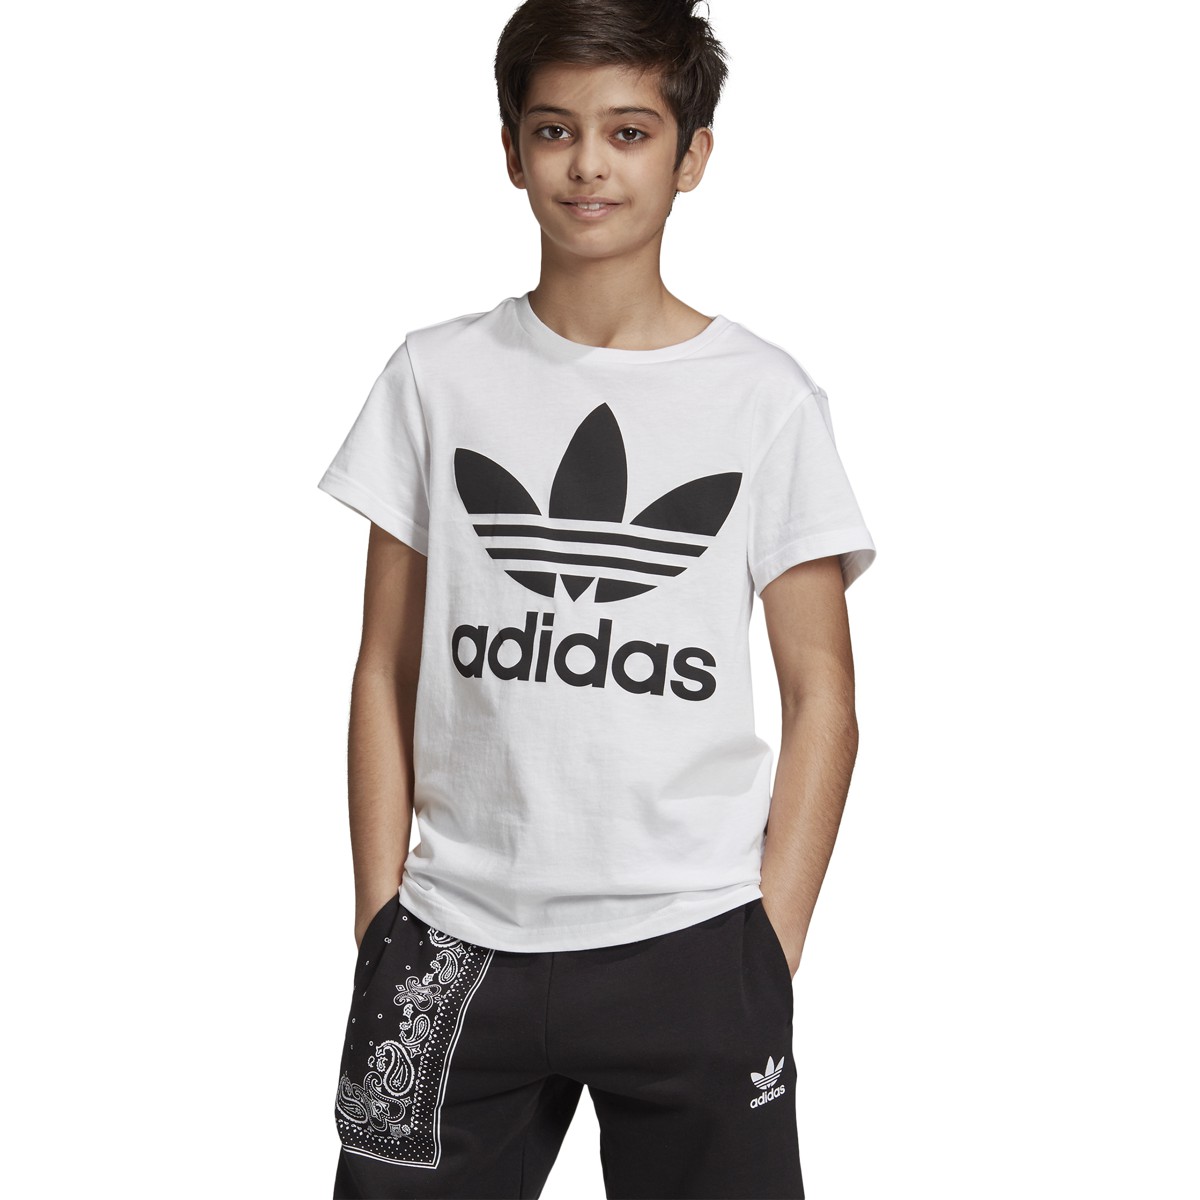 Adidas Originals Trefoil Kids T-Shirt White-Black dv2904 | eBay